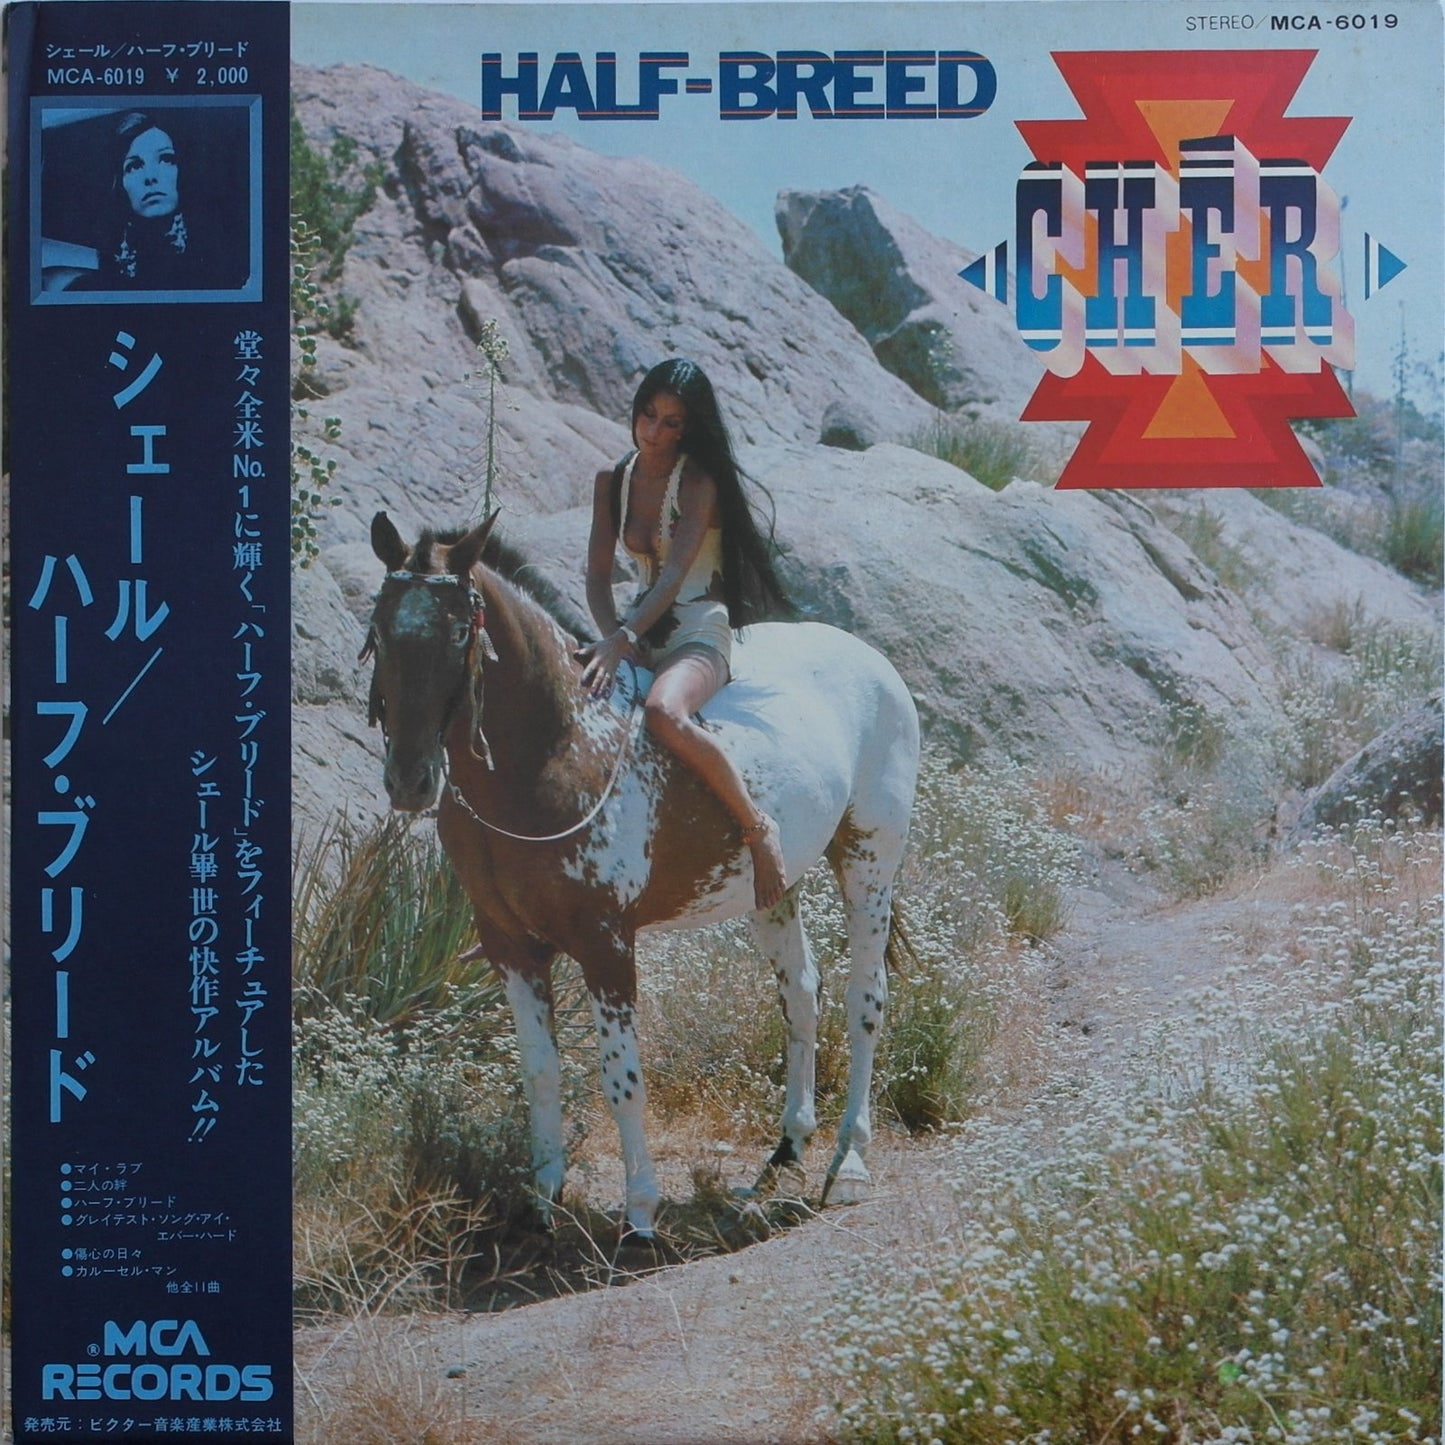 CHER - Half-Breed